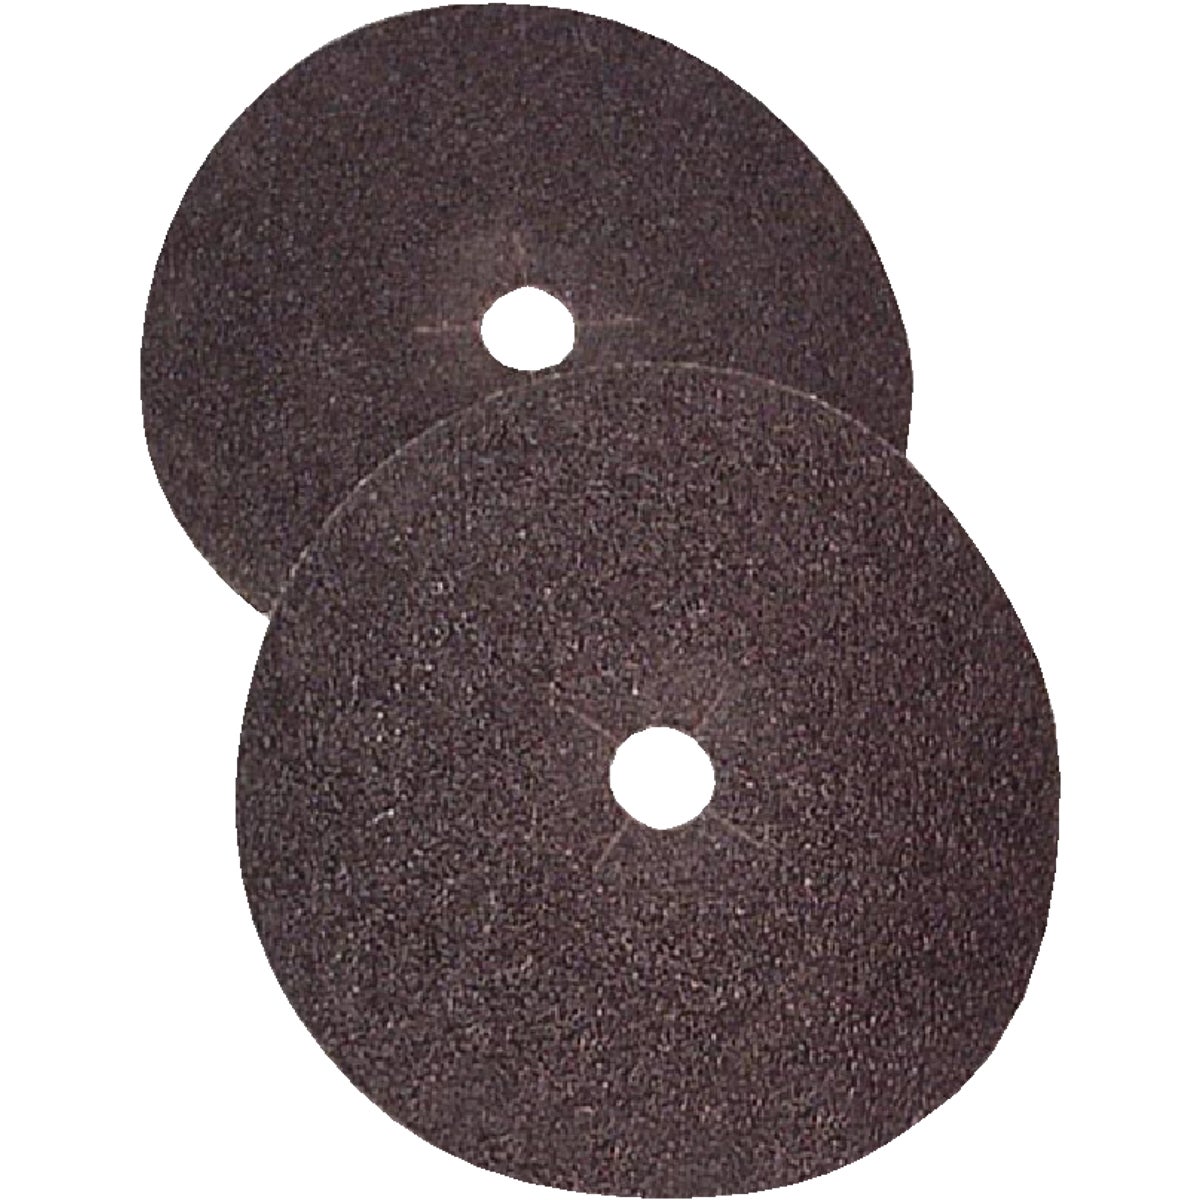 Virginia Abrasives 7 In. x 5/16 In. 100 Grit Floor Sanding Disc